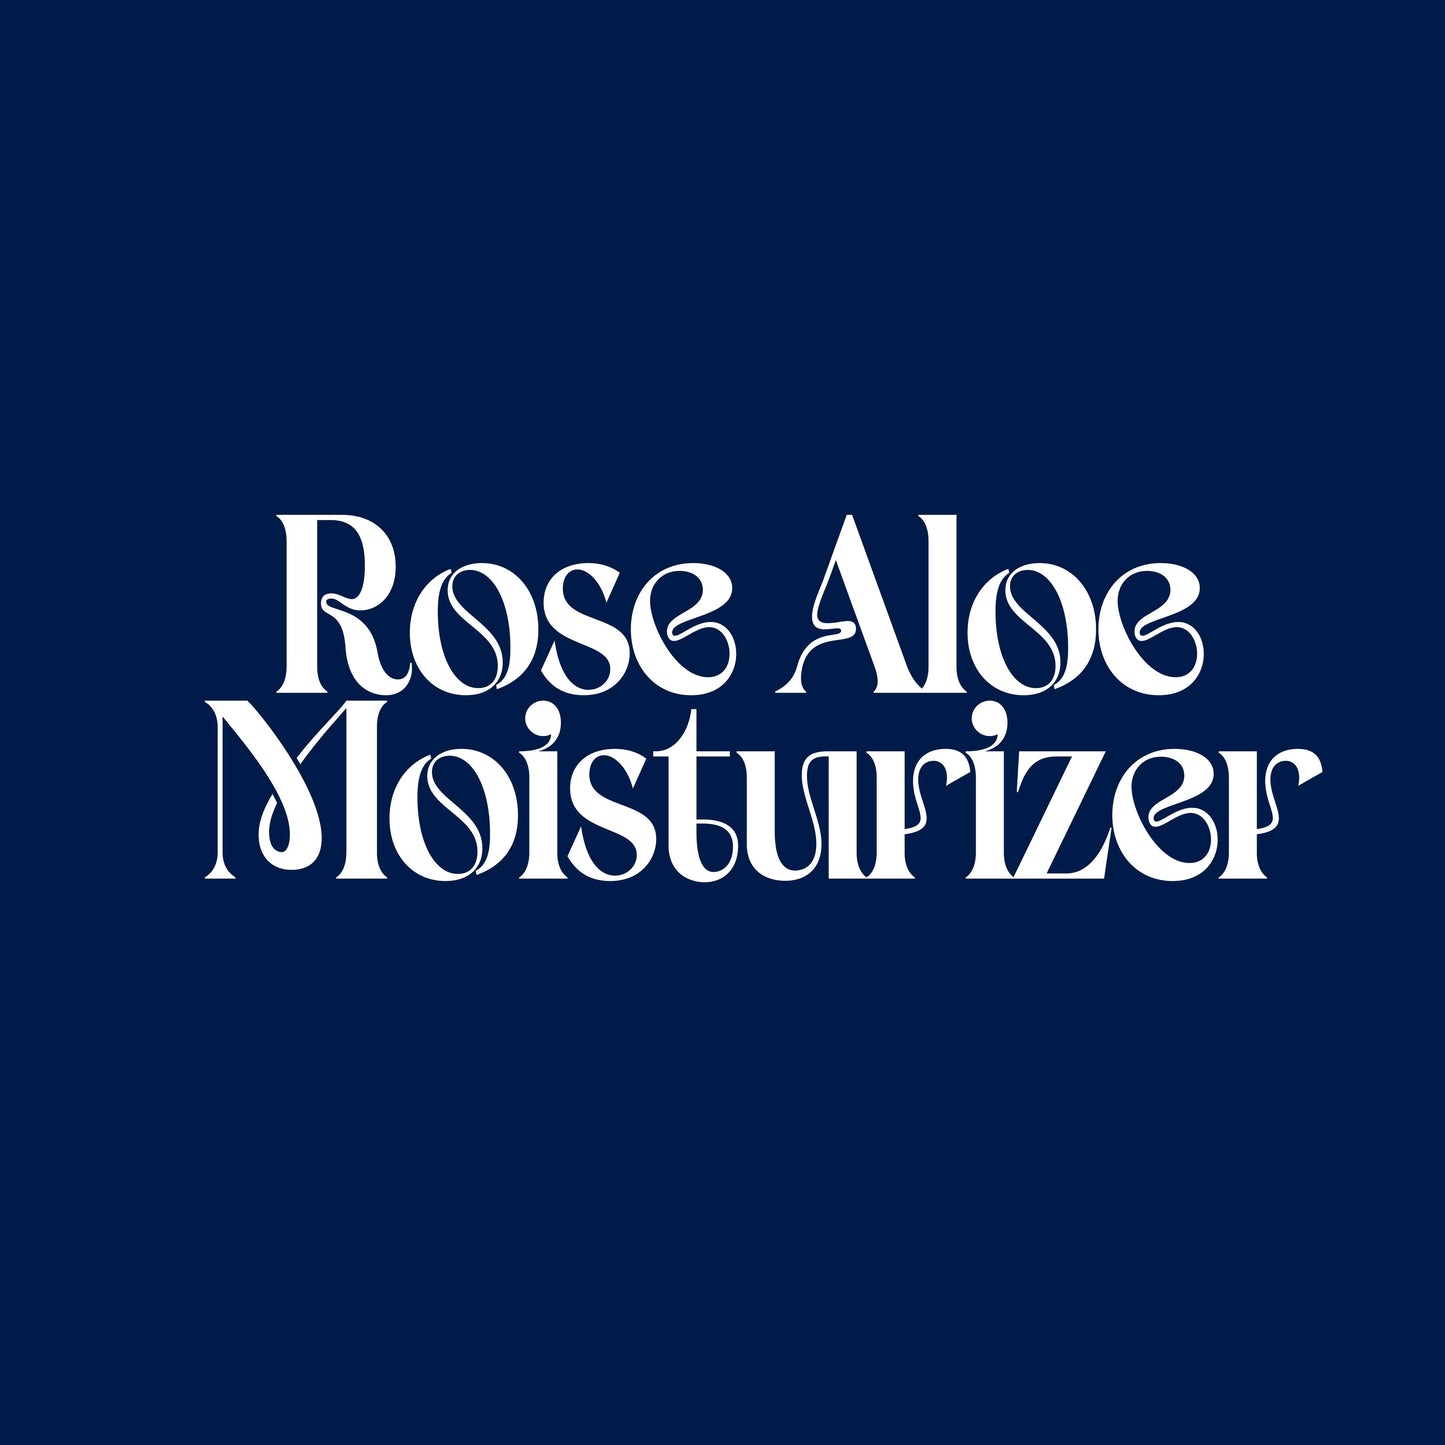 Rose Aloe Moisturizer